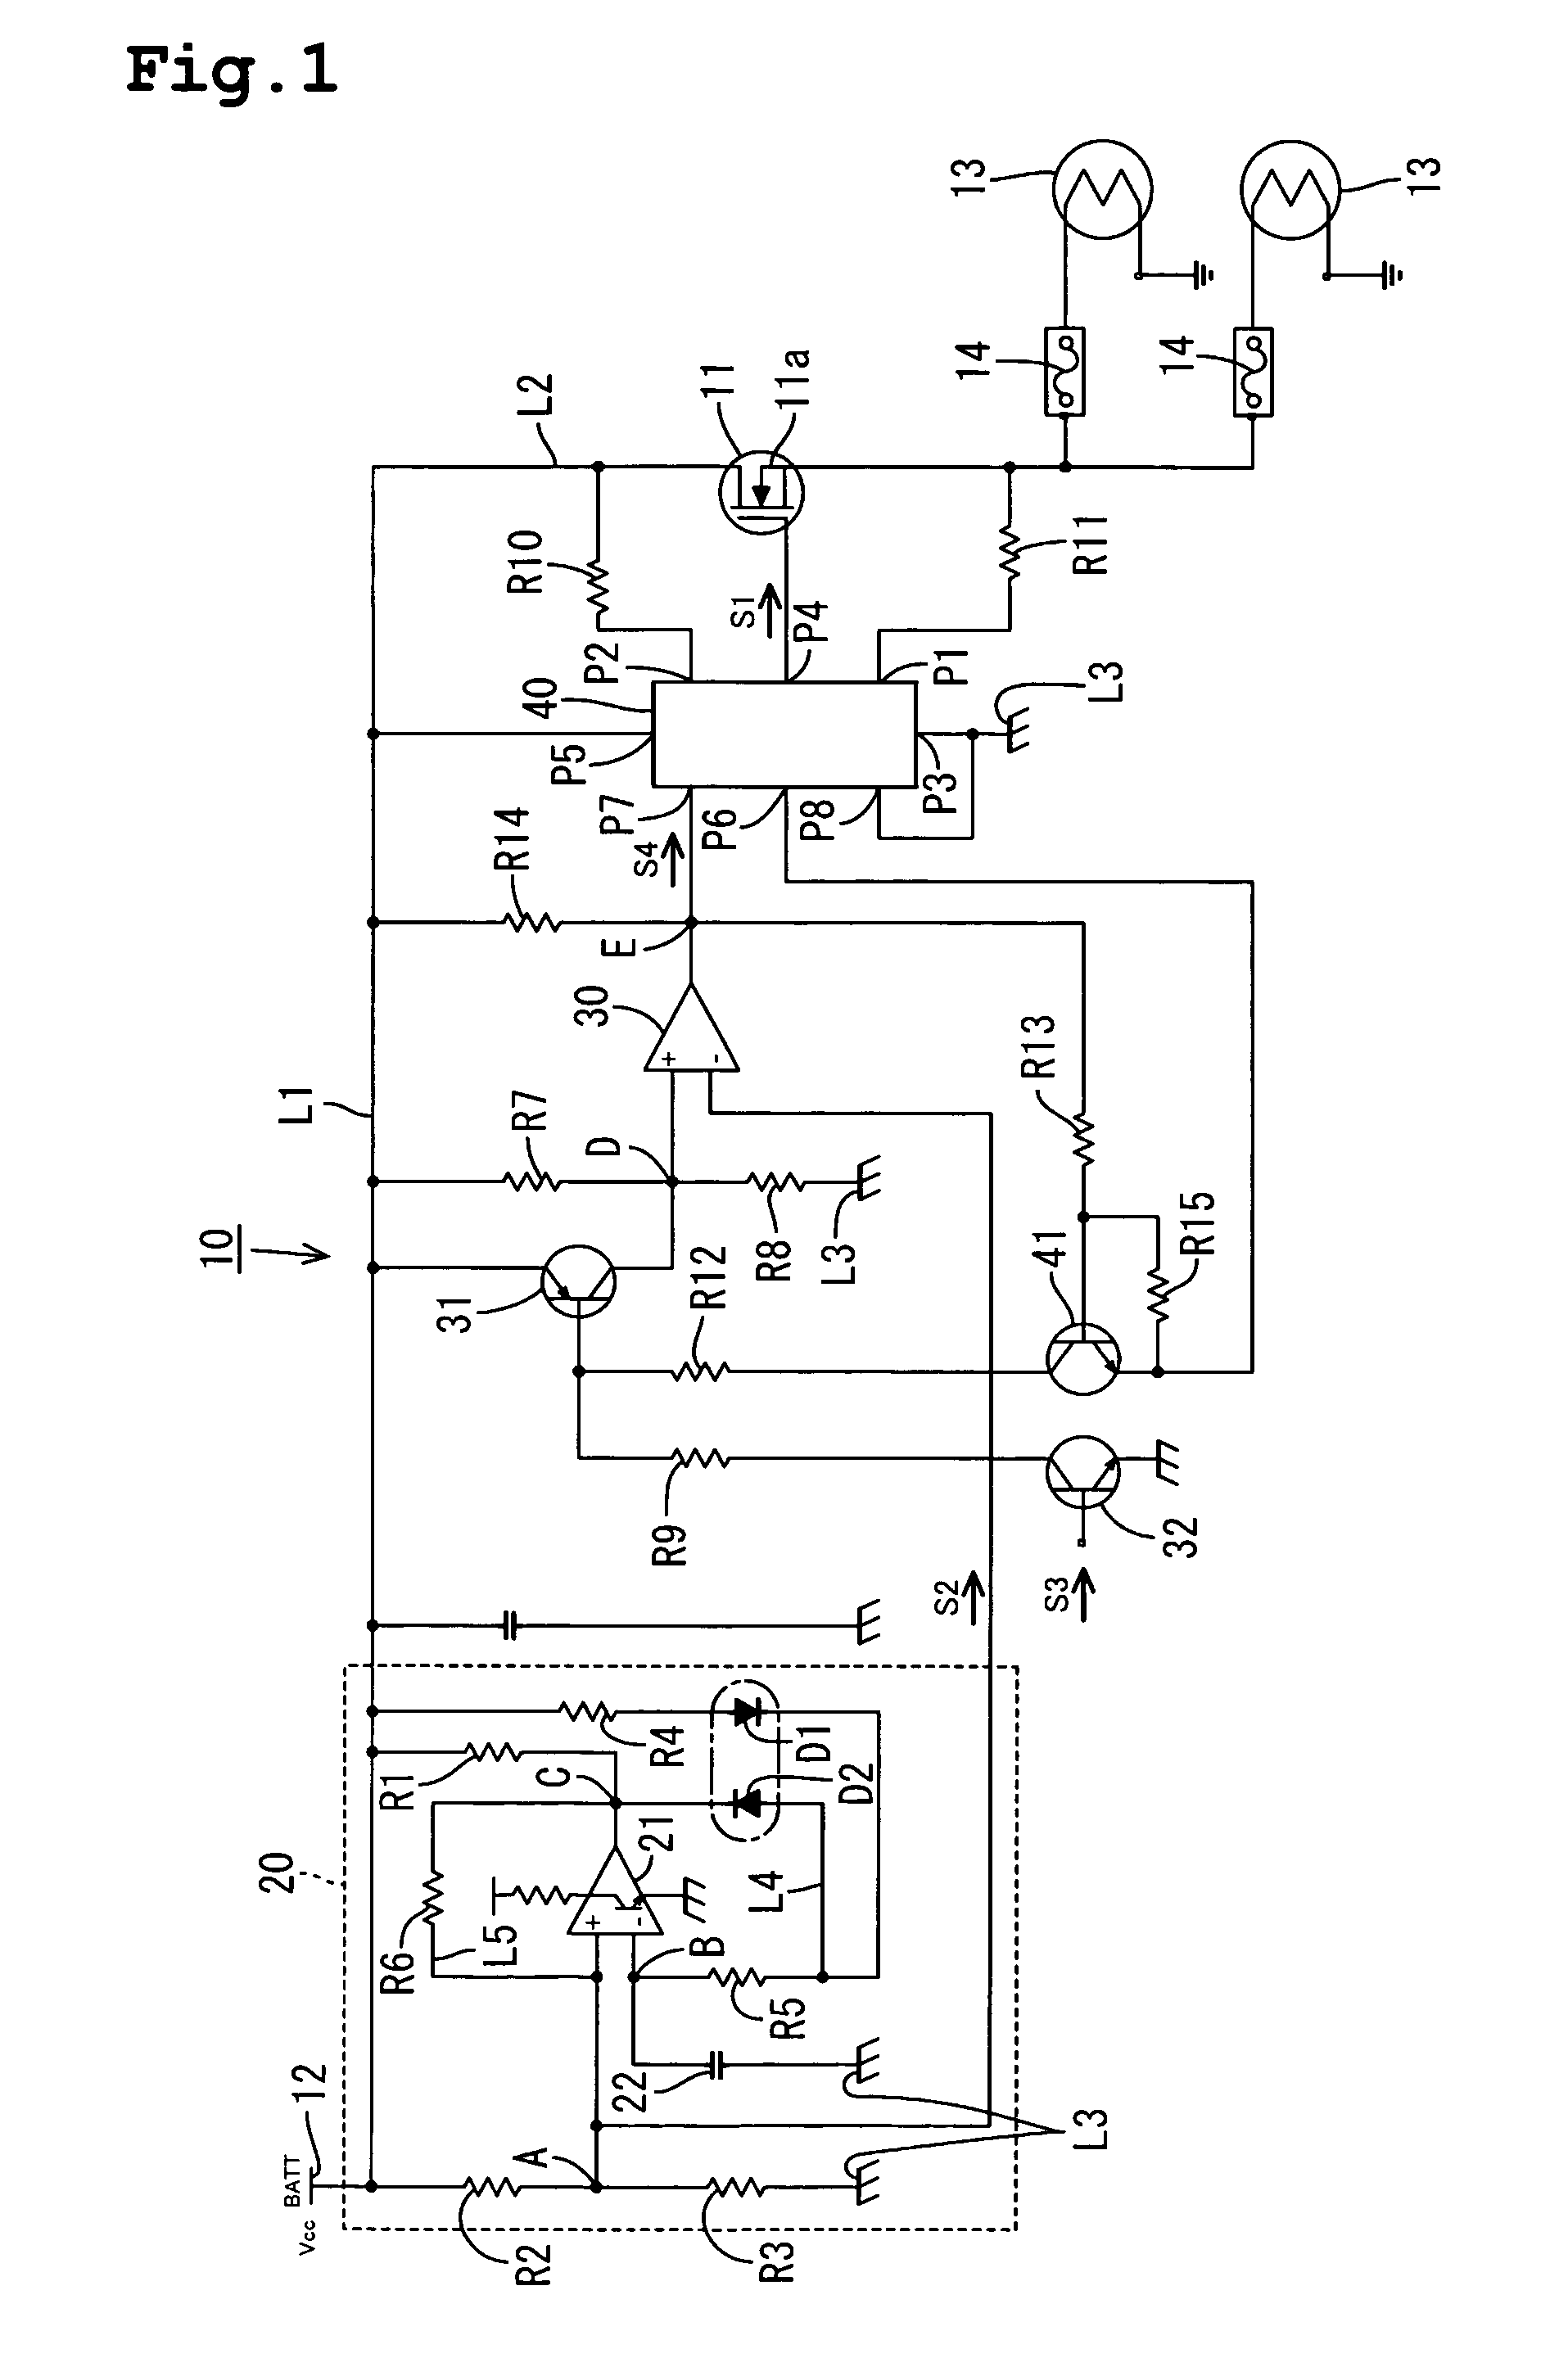 PWM signal generation circuit and PWM control circuit